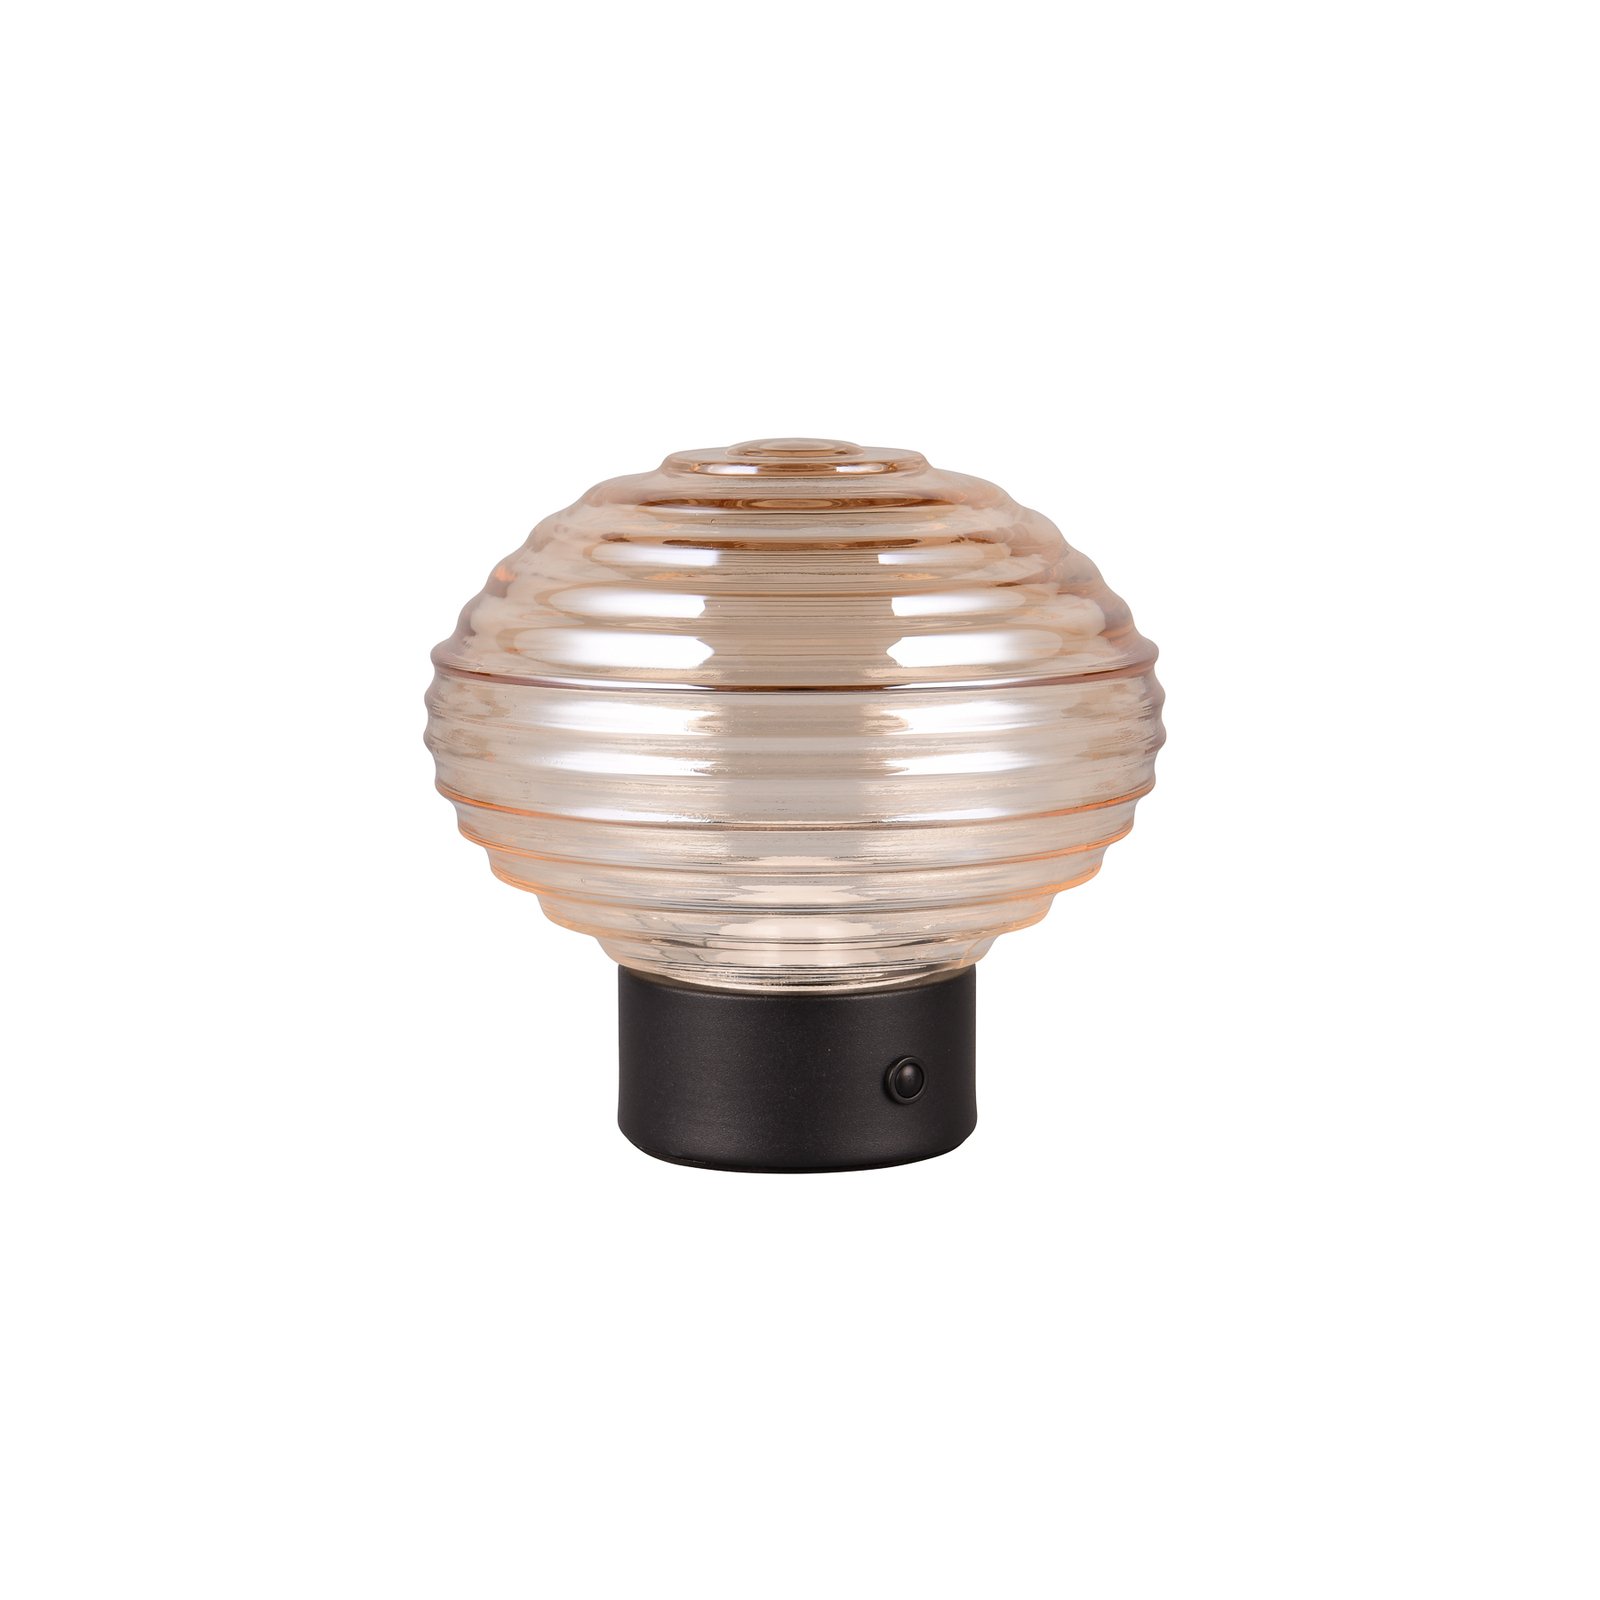 LED-Akku-Tischlampe Earl, schwarz/amber, Höhe 14,5 cm, Glas